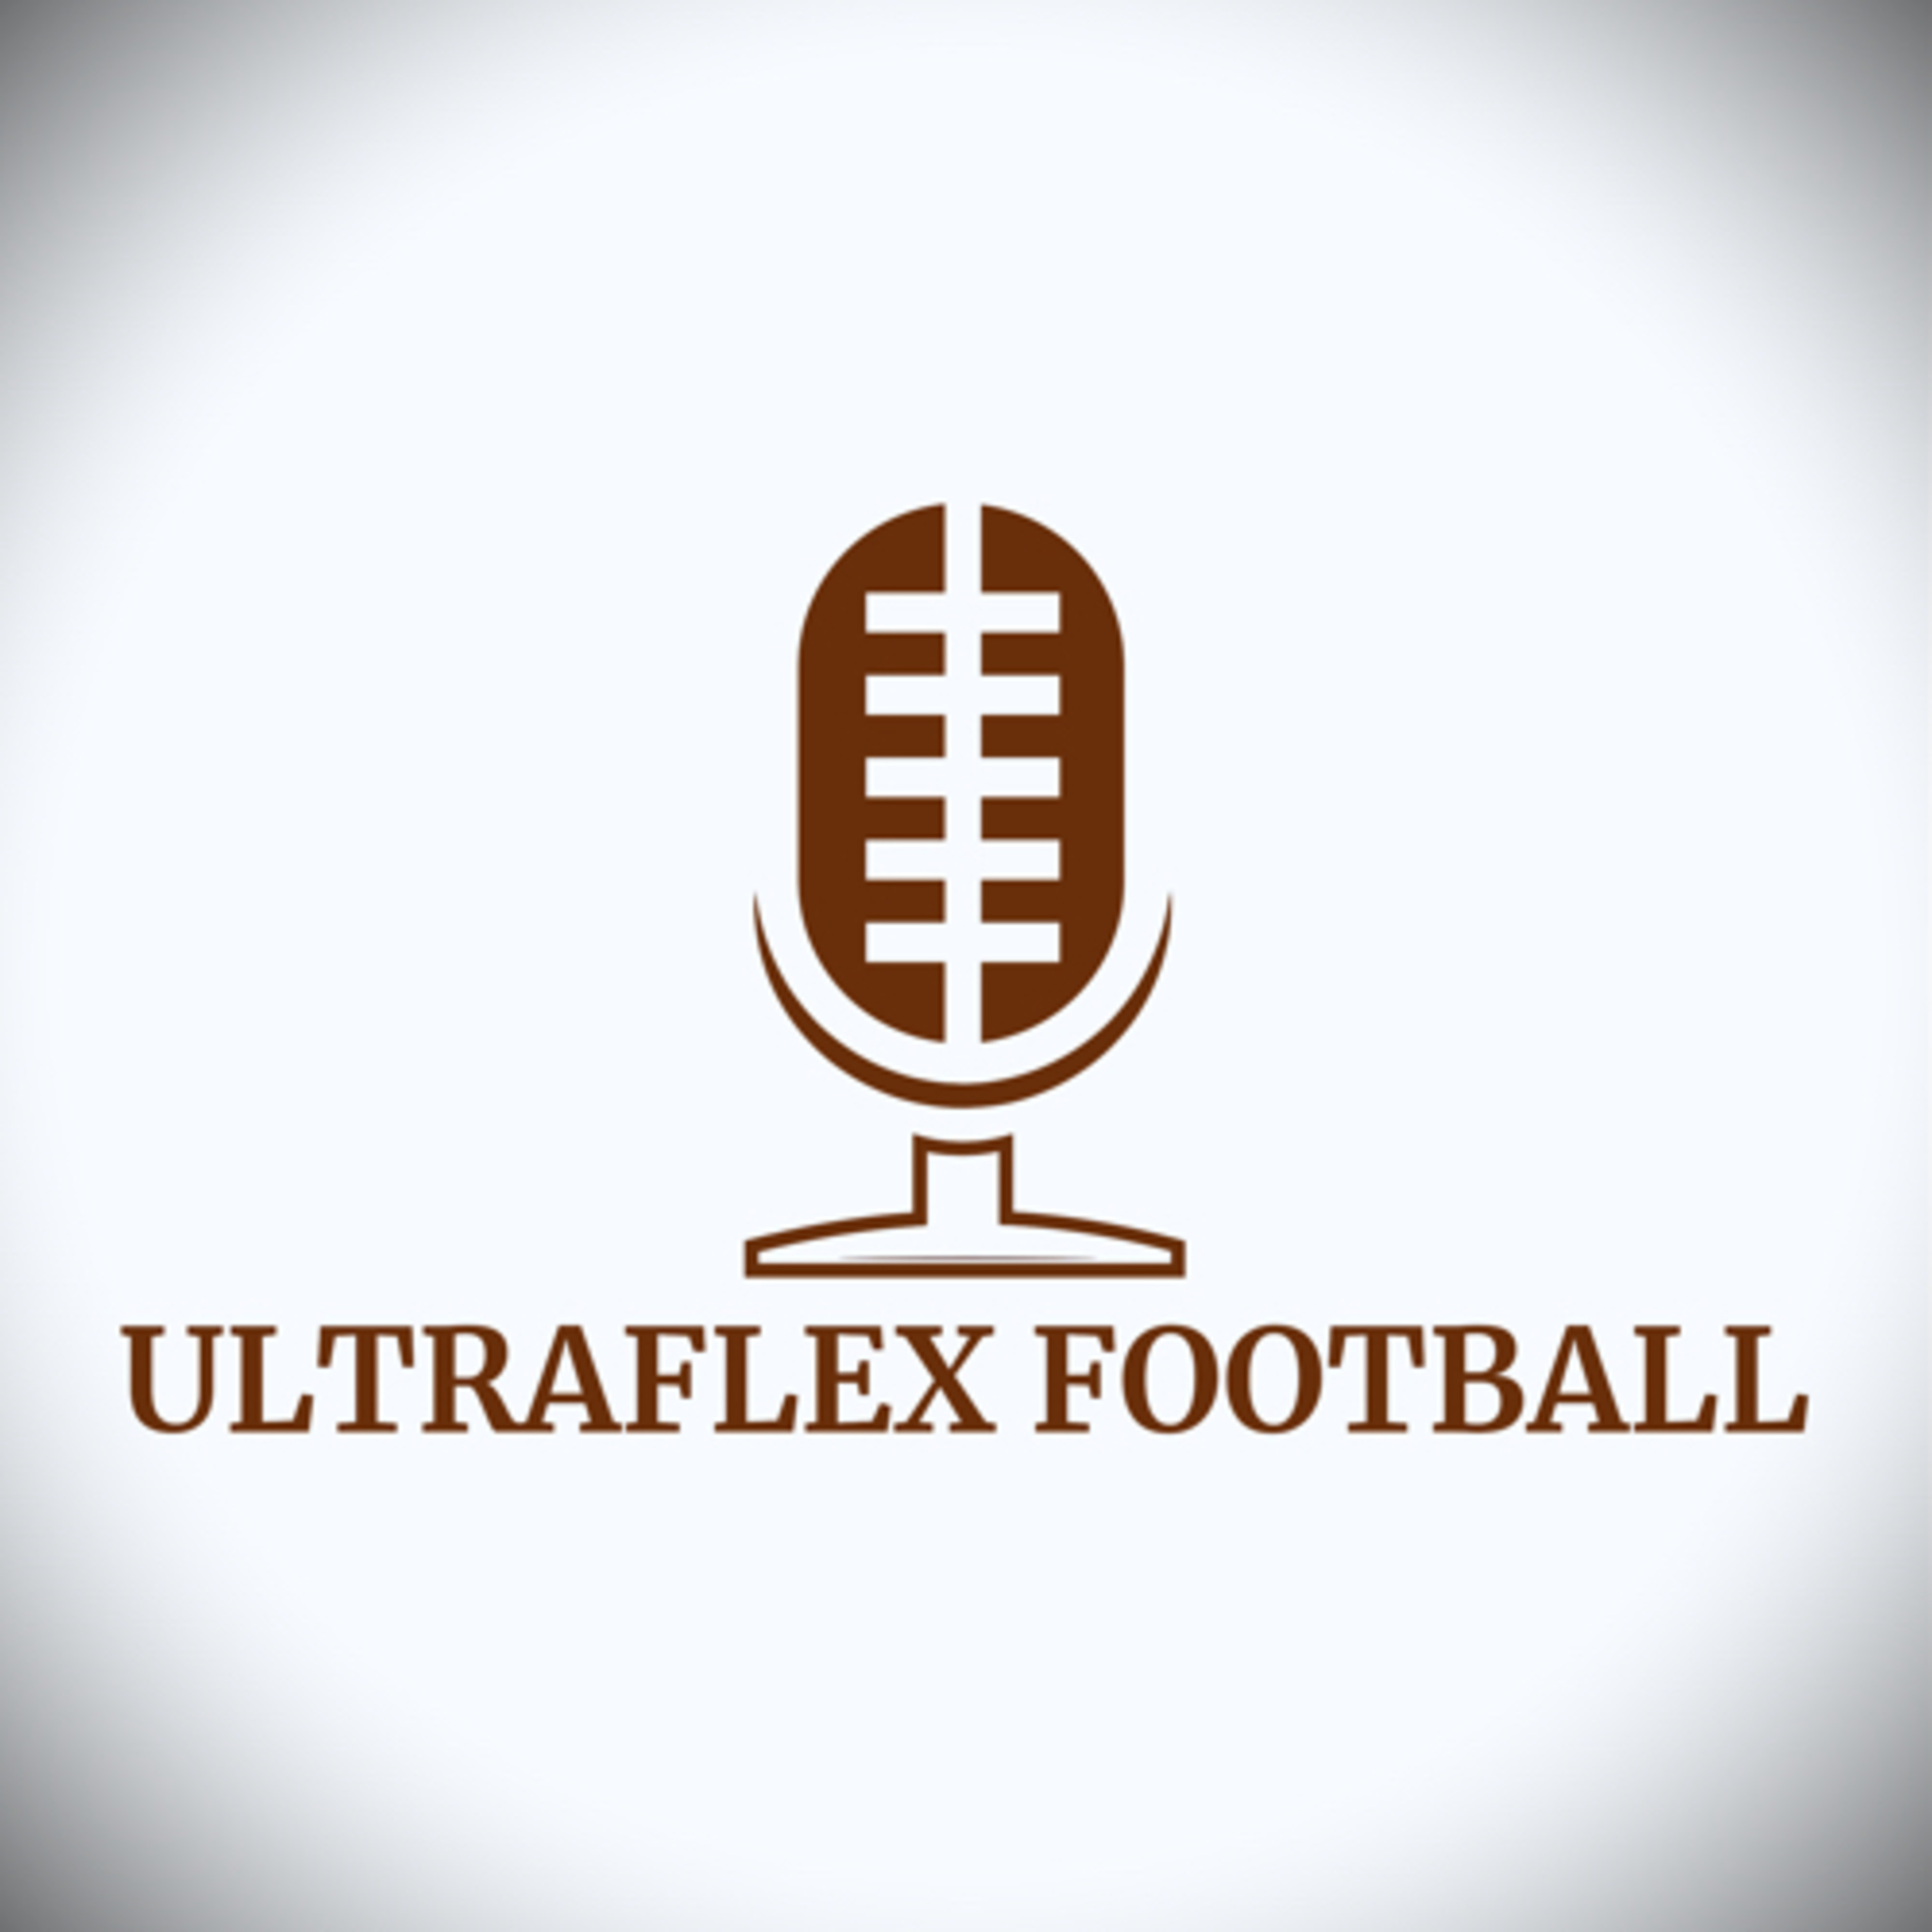 Fresh update on "doug d" discussed on Ultraflex Football